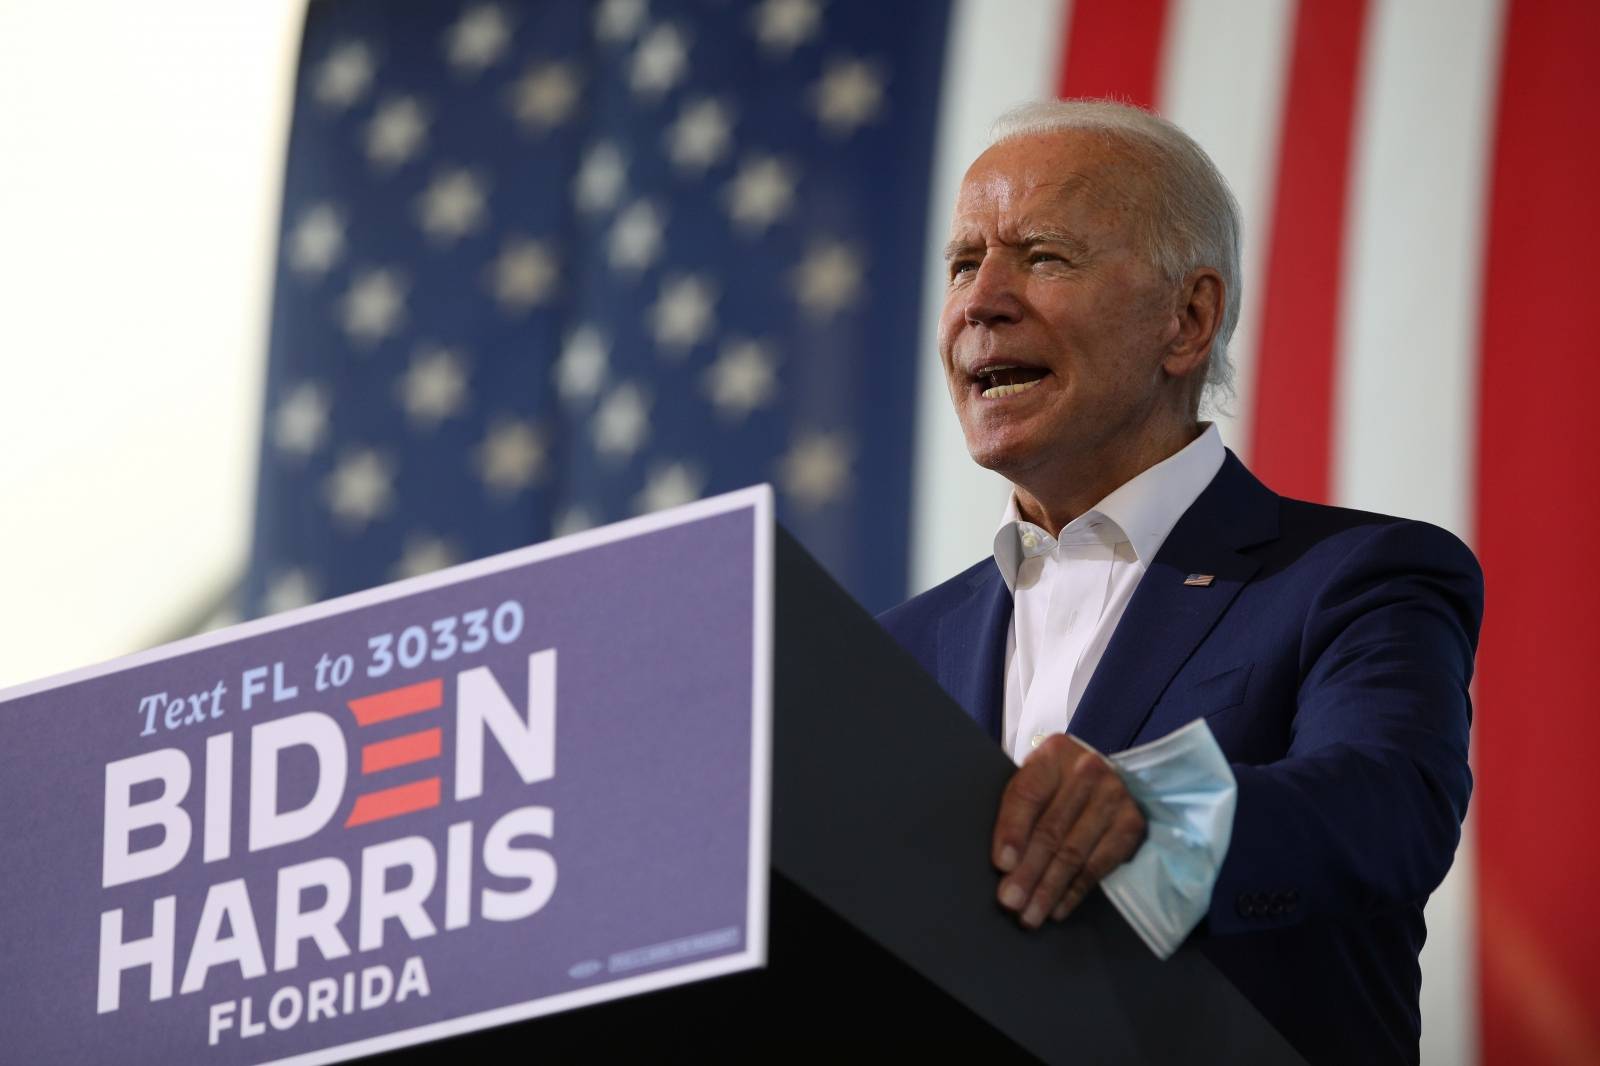 Democratic presidential candidate Joe Biden campaigns in Florida